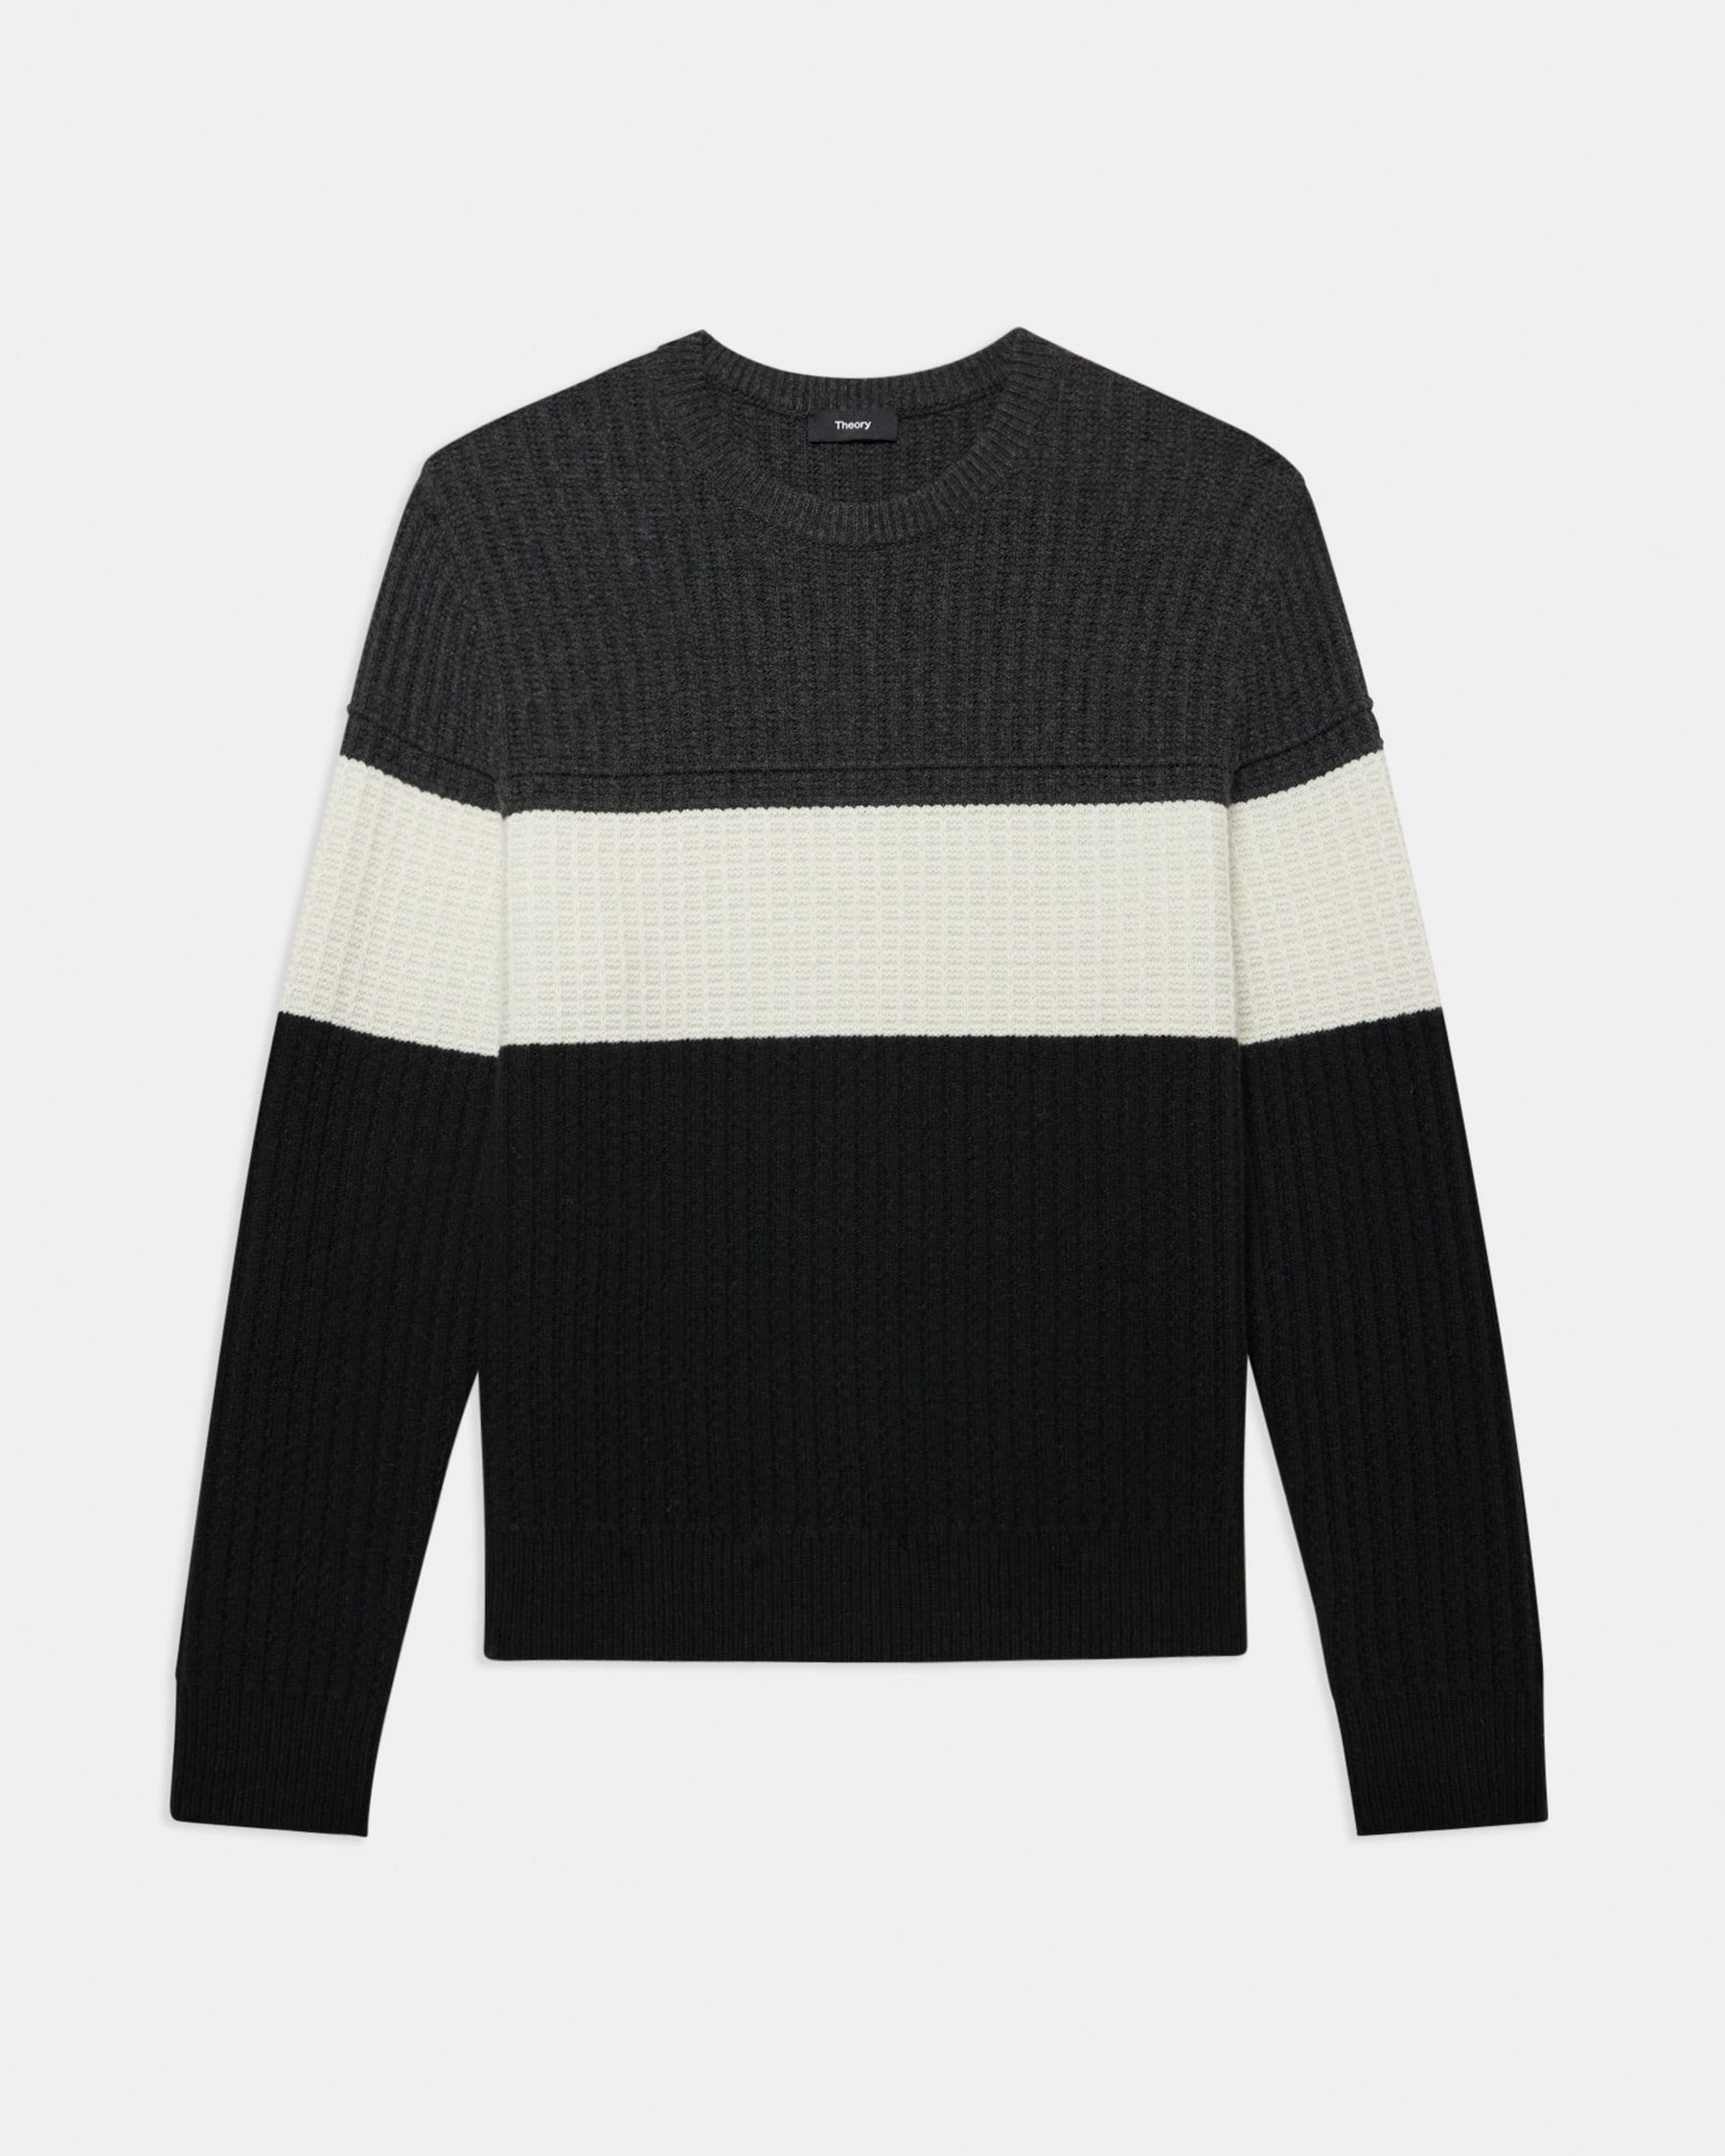 Lamar Crewneck Sweater in Wool-Cashmere